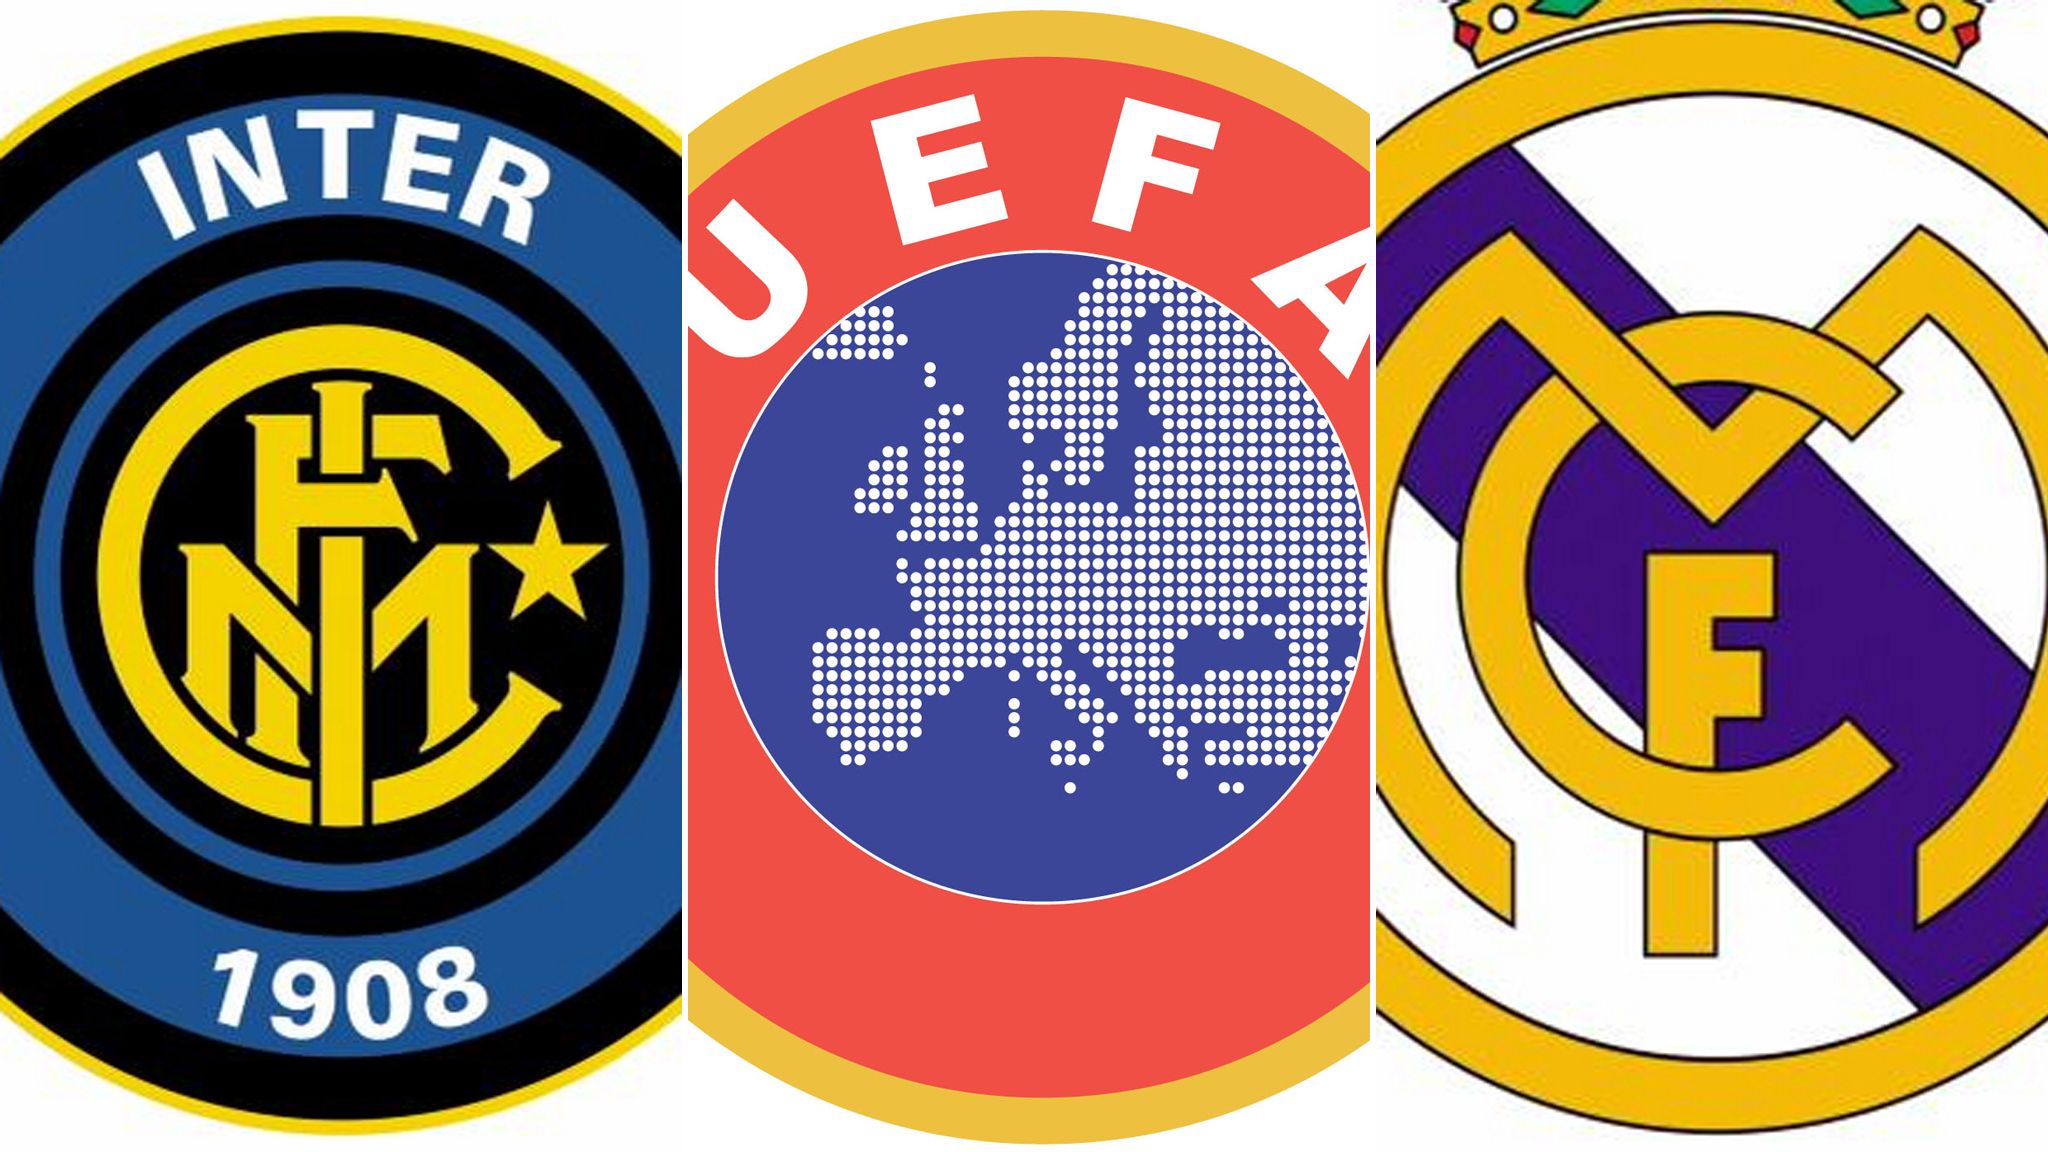 Inter, UEFA & Real Madrid logos